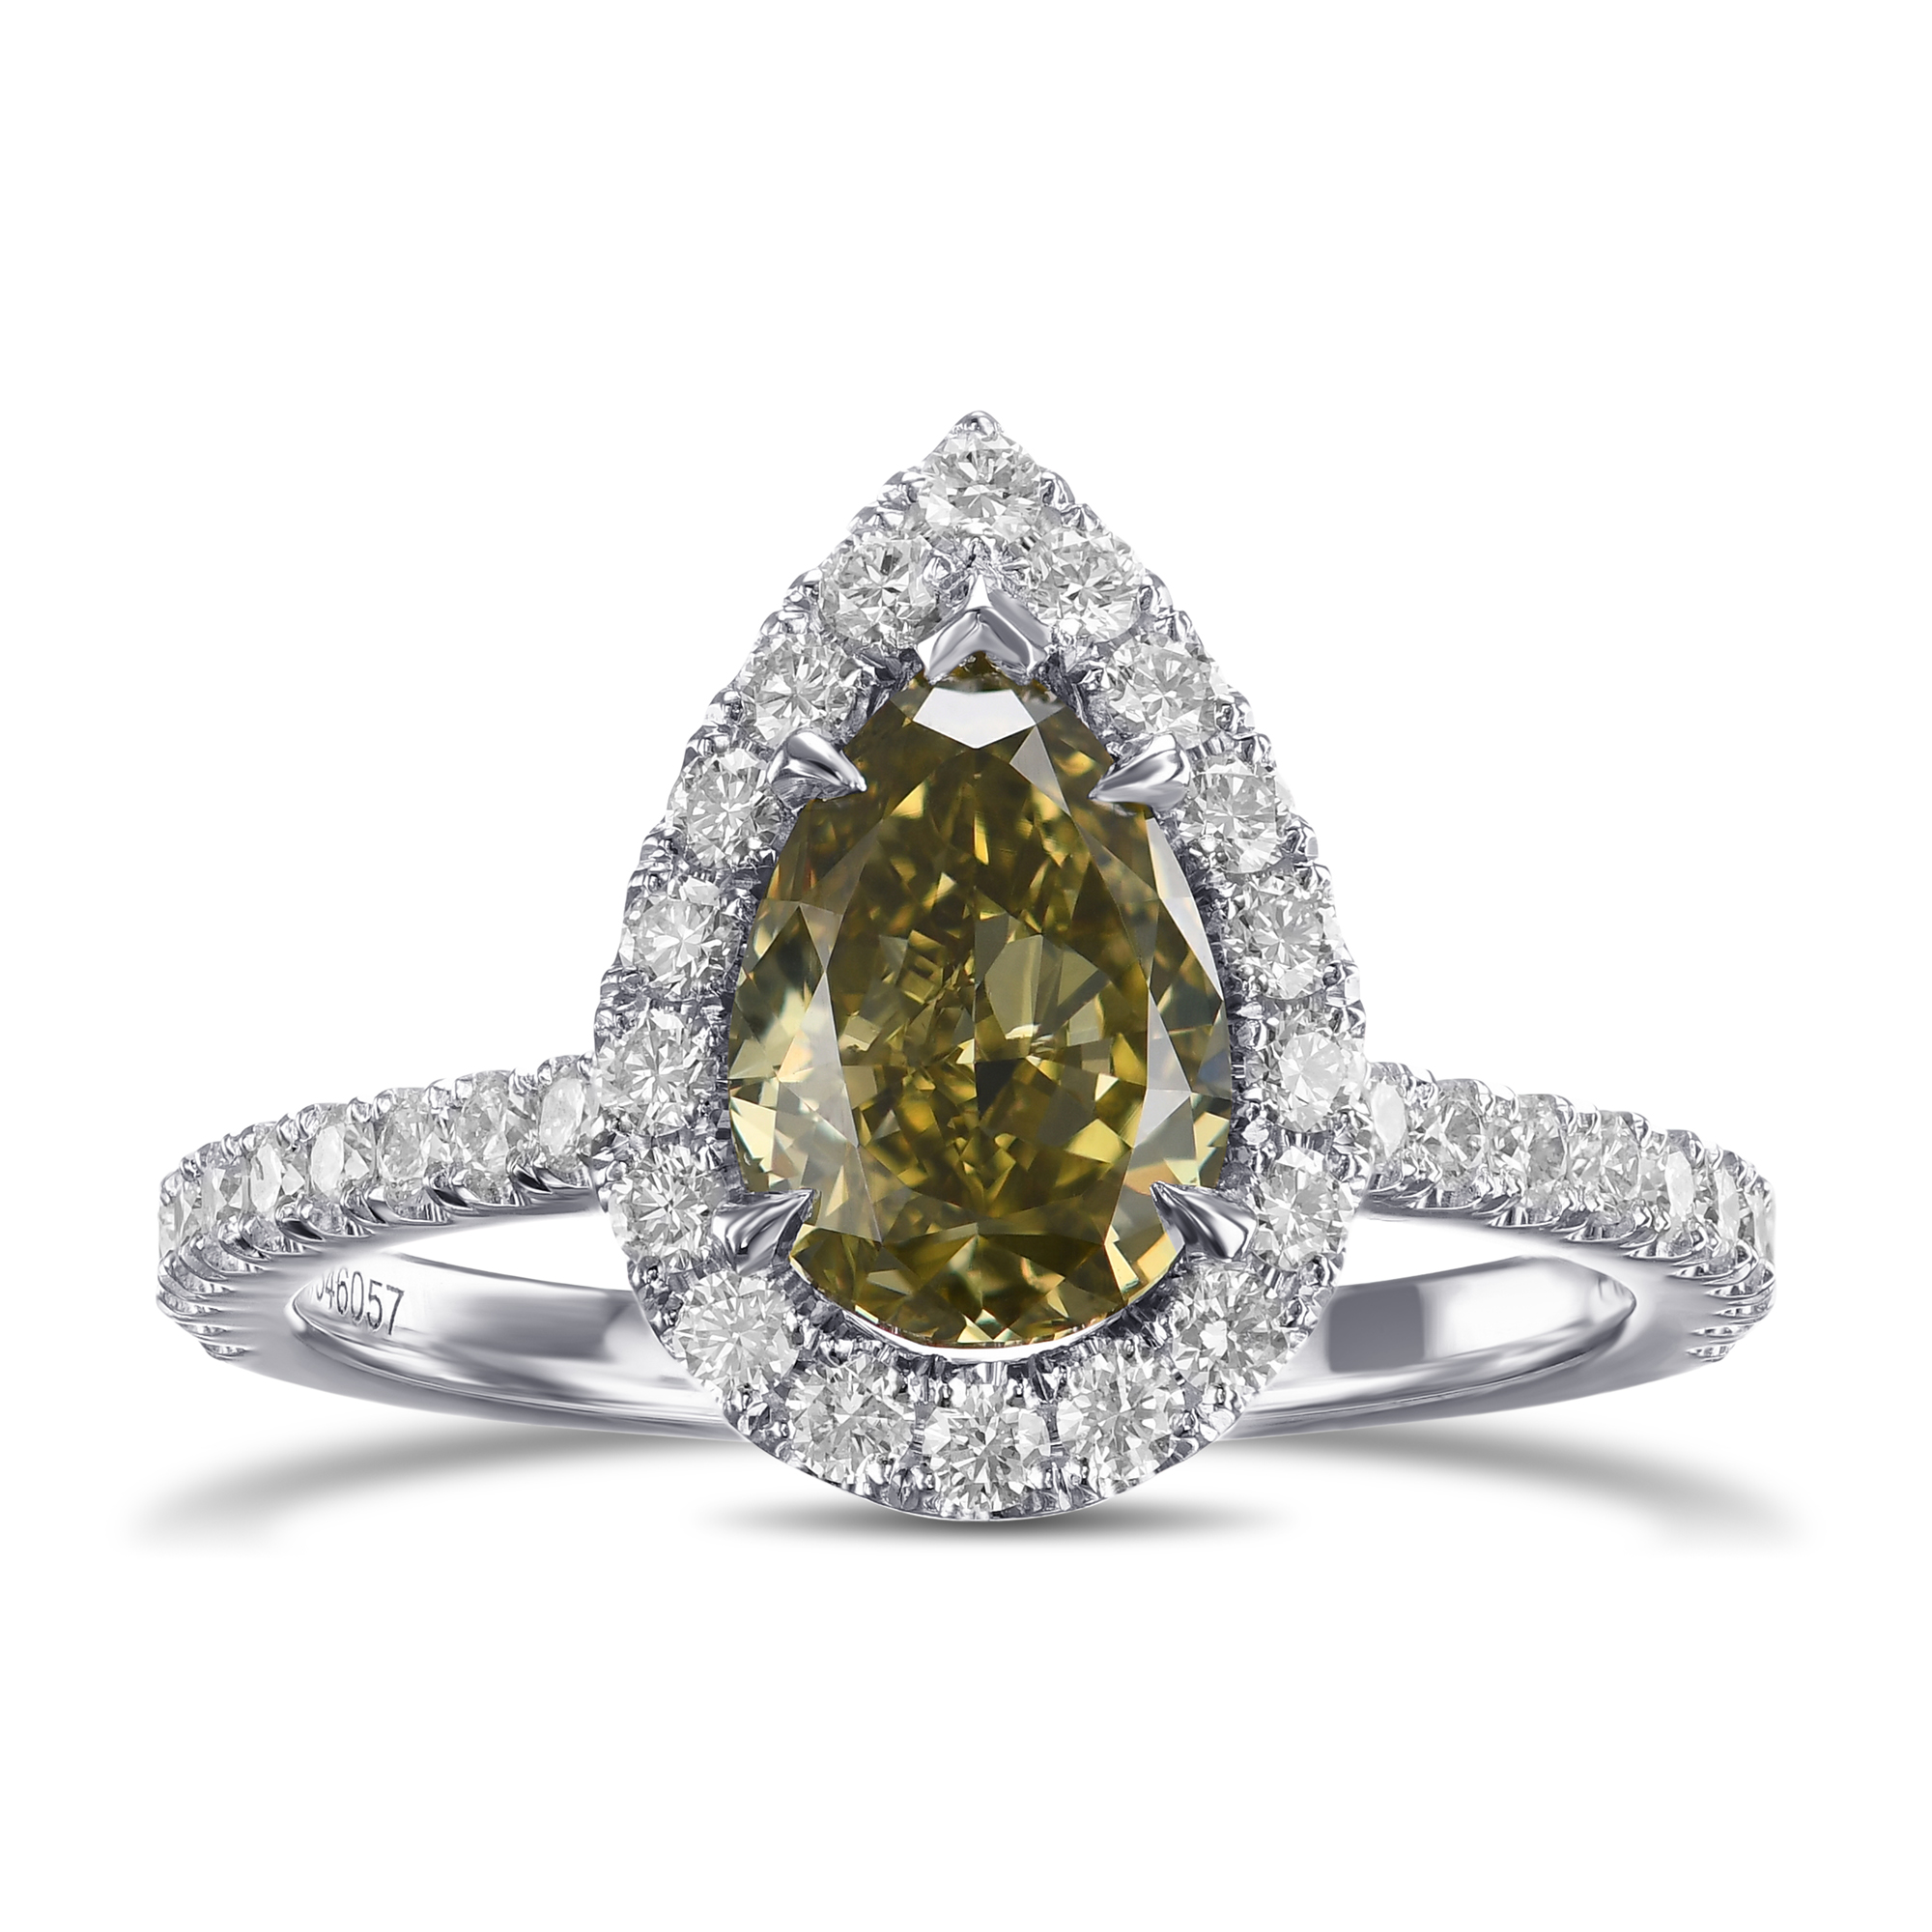 Chameleon Pear Diamond Halo Style Engagement Ring, SKU 546057 (1.74Ct TW)